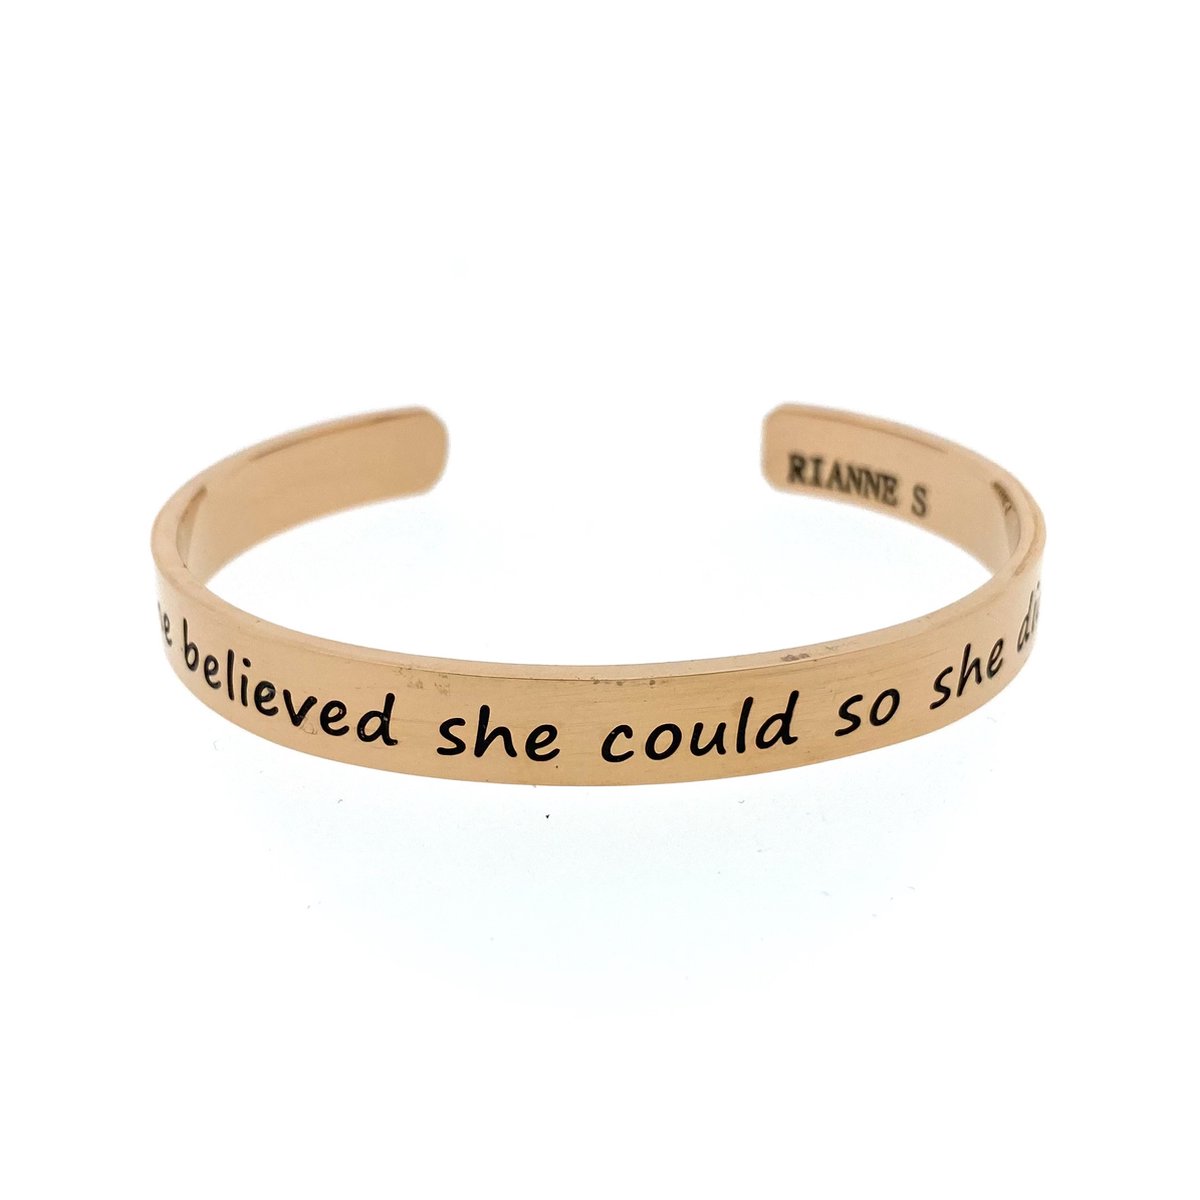 She believed she could so she did - Bangle armband met tekst - Roségoud kleurig - One-size - Inclusief (gratis) cadeauverpakking!